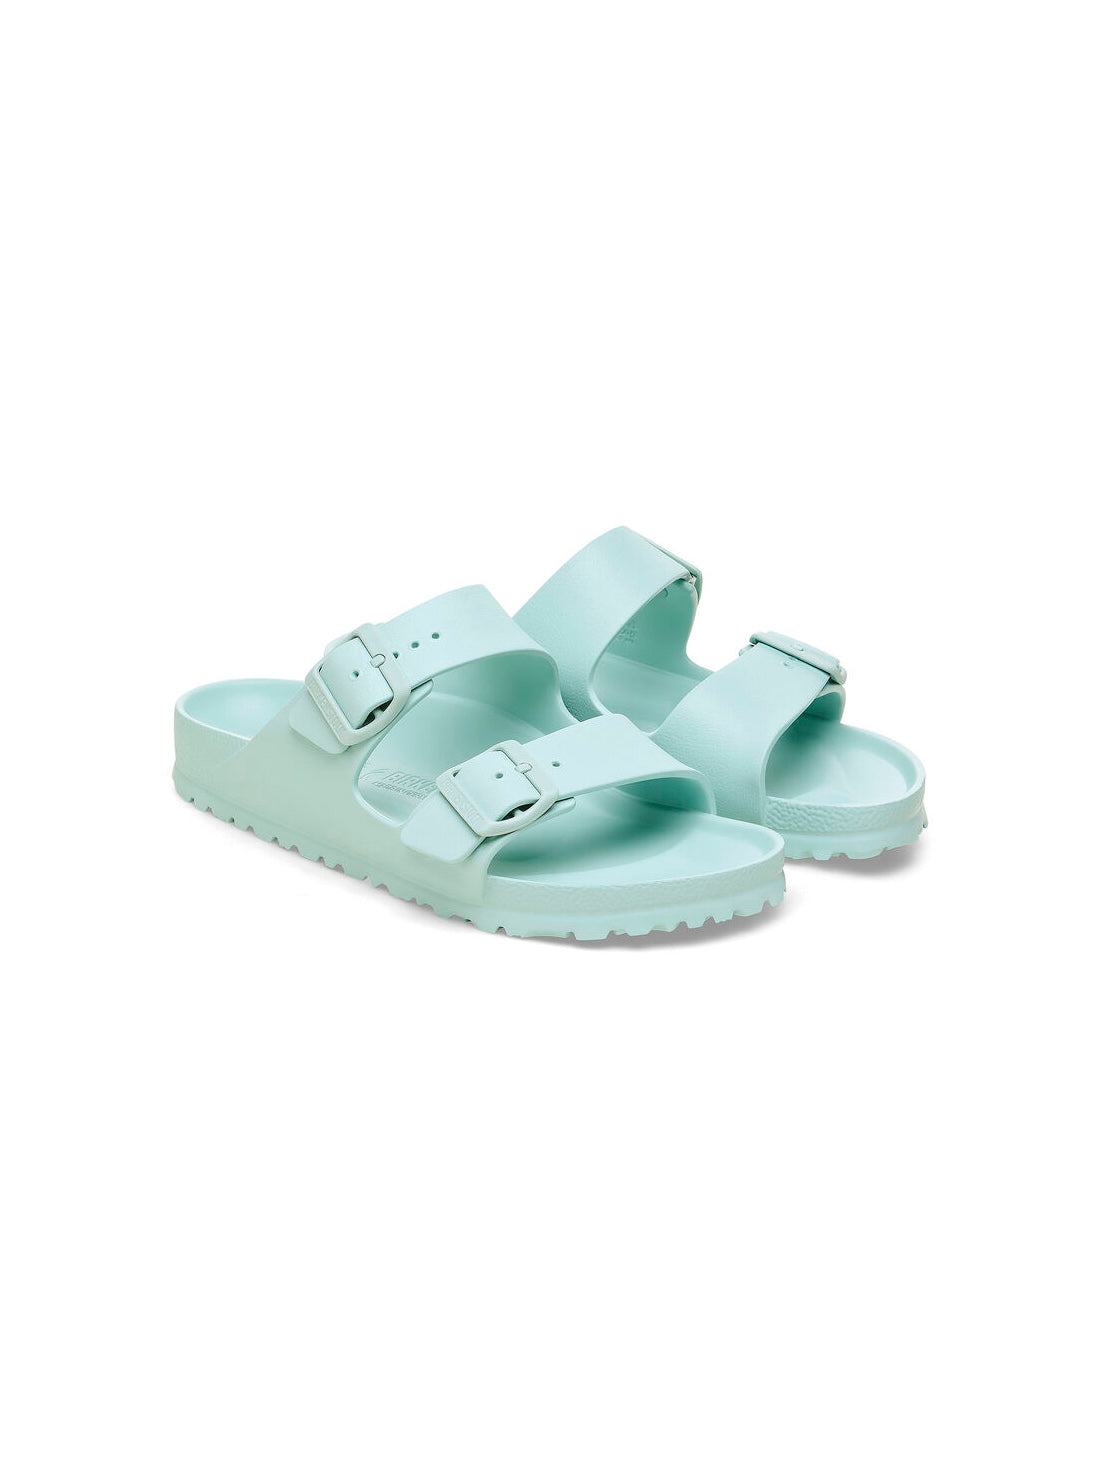 birkenstock arizona essentials eva sandal in surf green